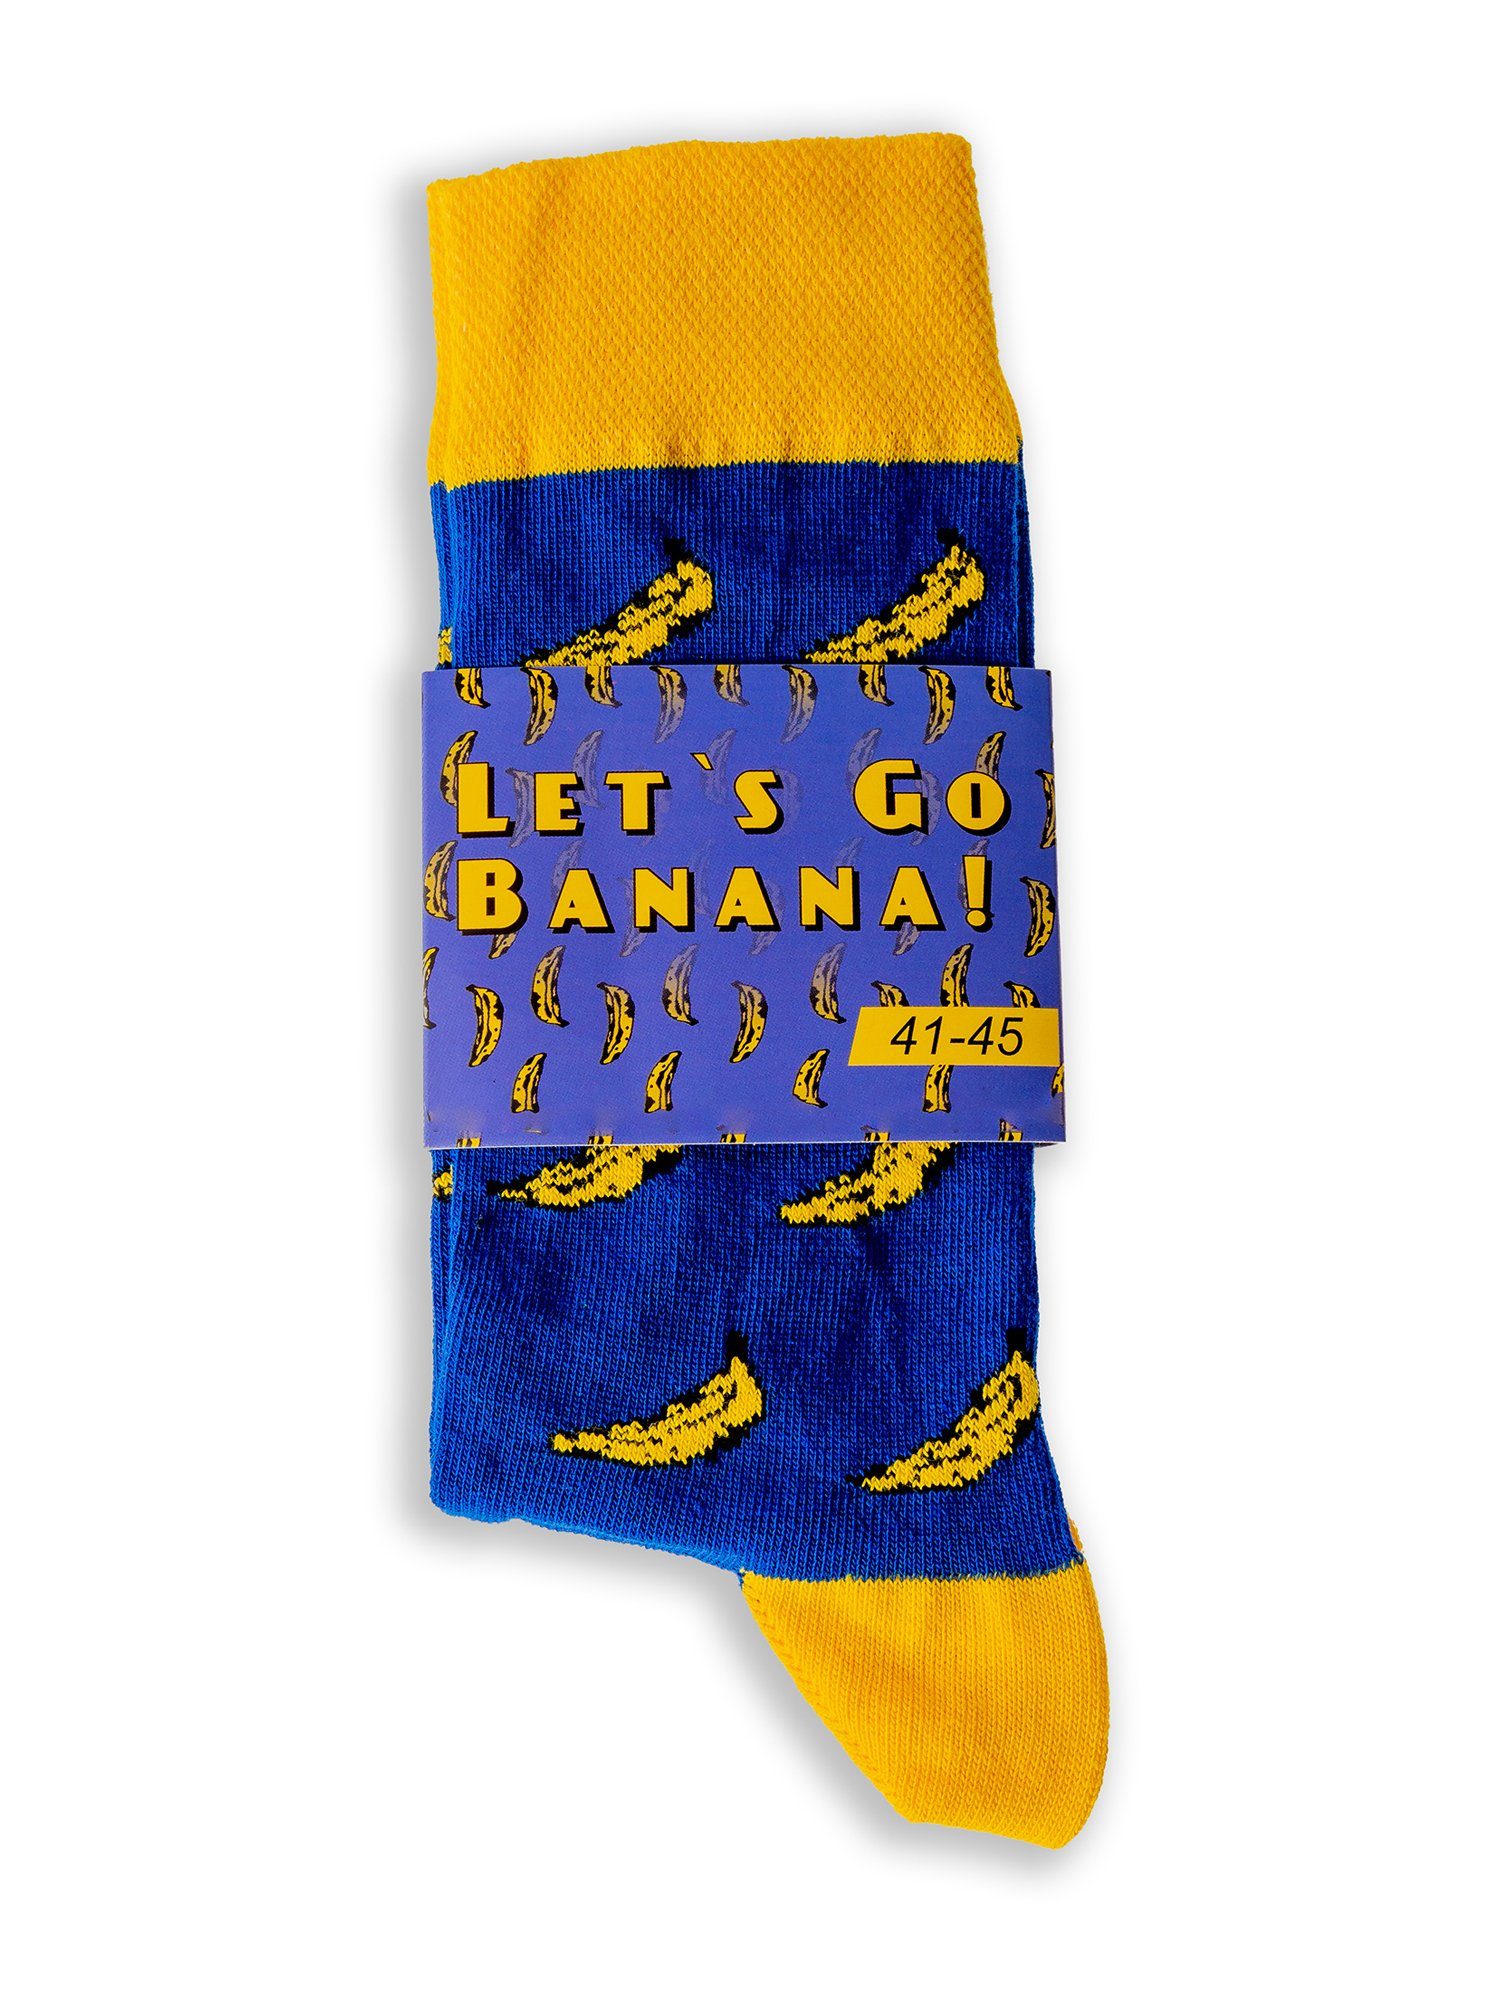 Chili Lifestyle Freizeitsocken Banderole Leisure Socks Banana